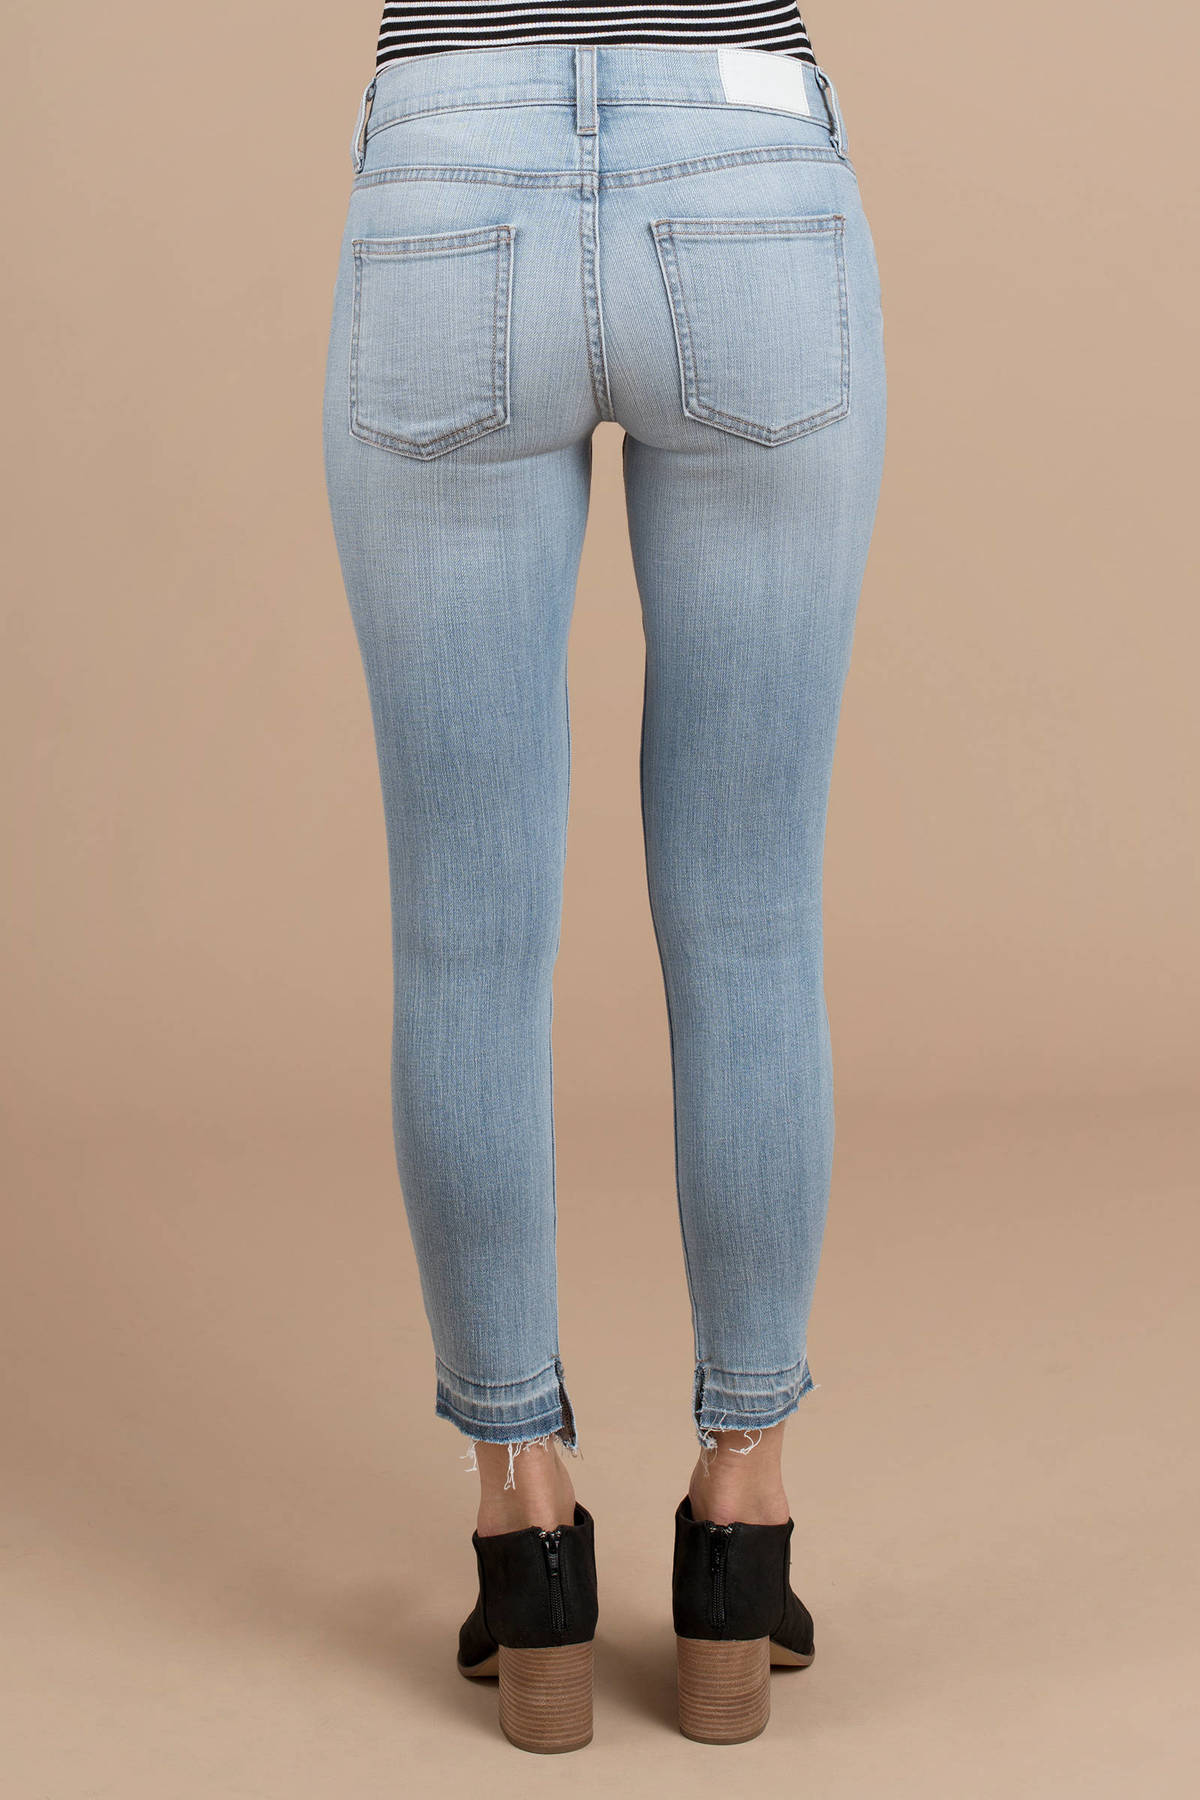 Audrey Mid Rise Skinny Jeans in Light Wash - NZ$ 94 | Tobi NZ